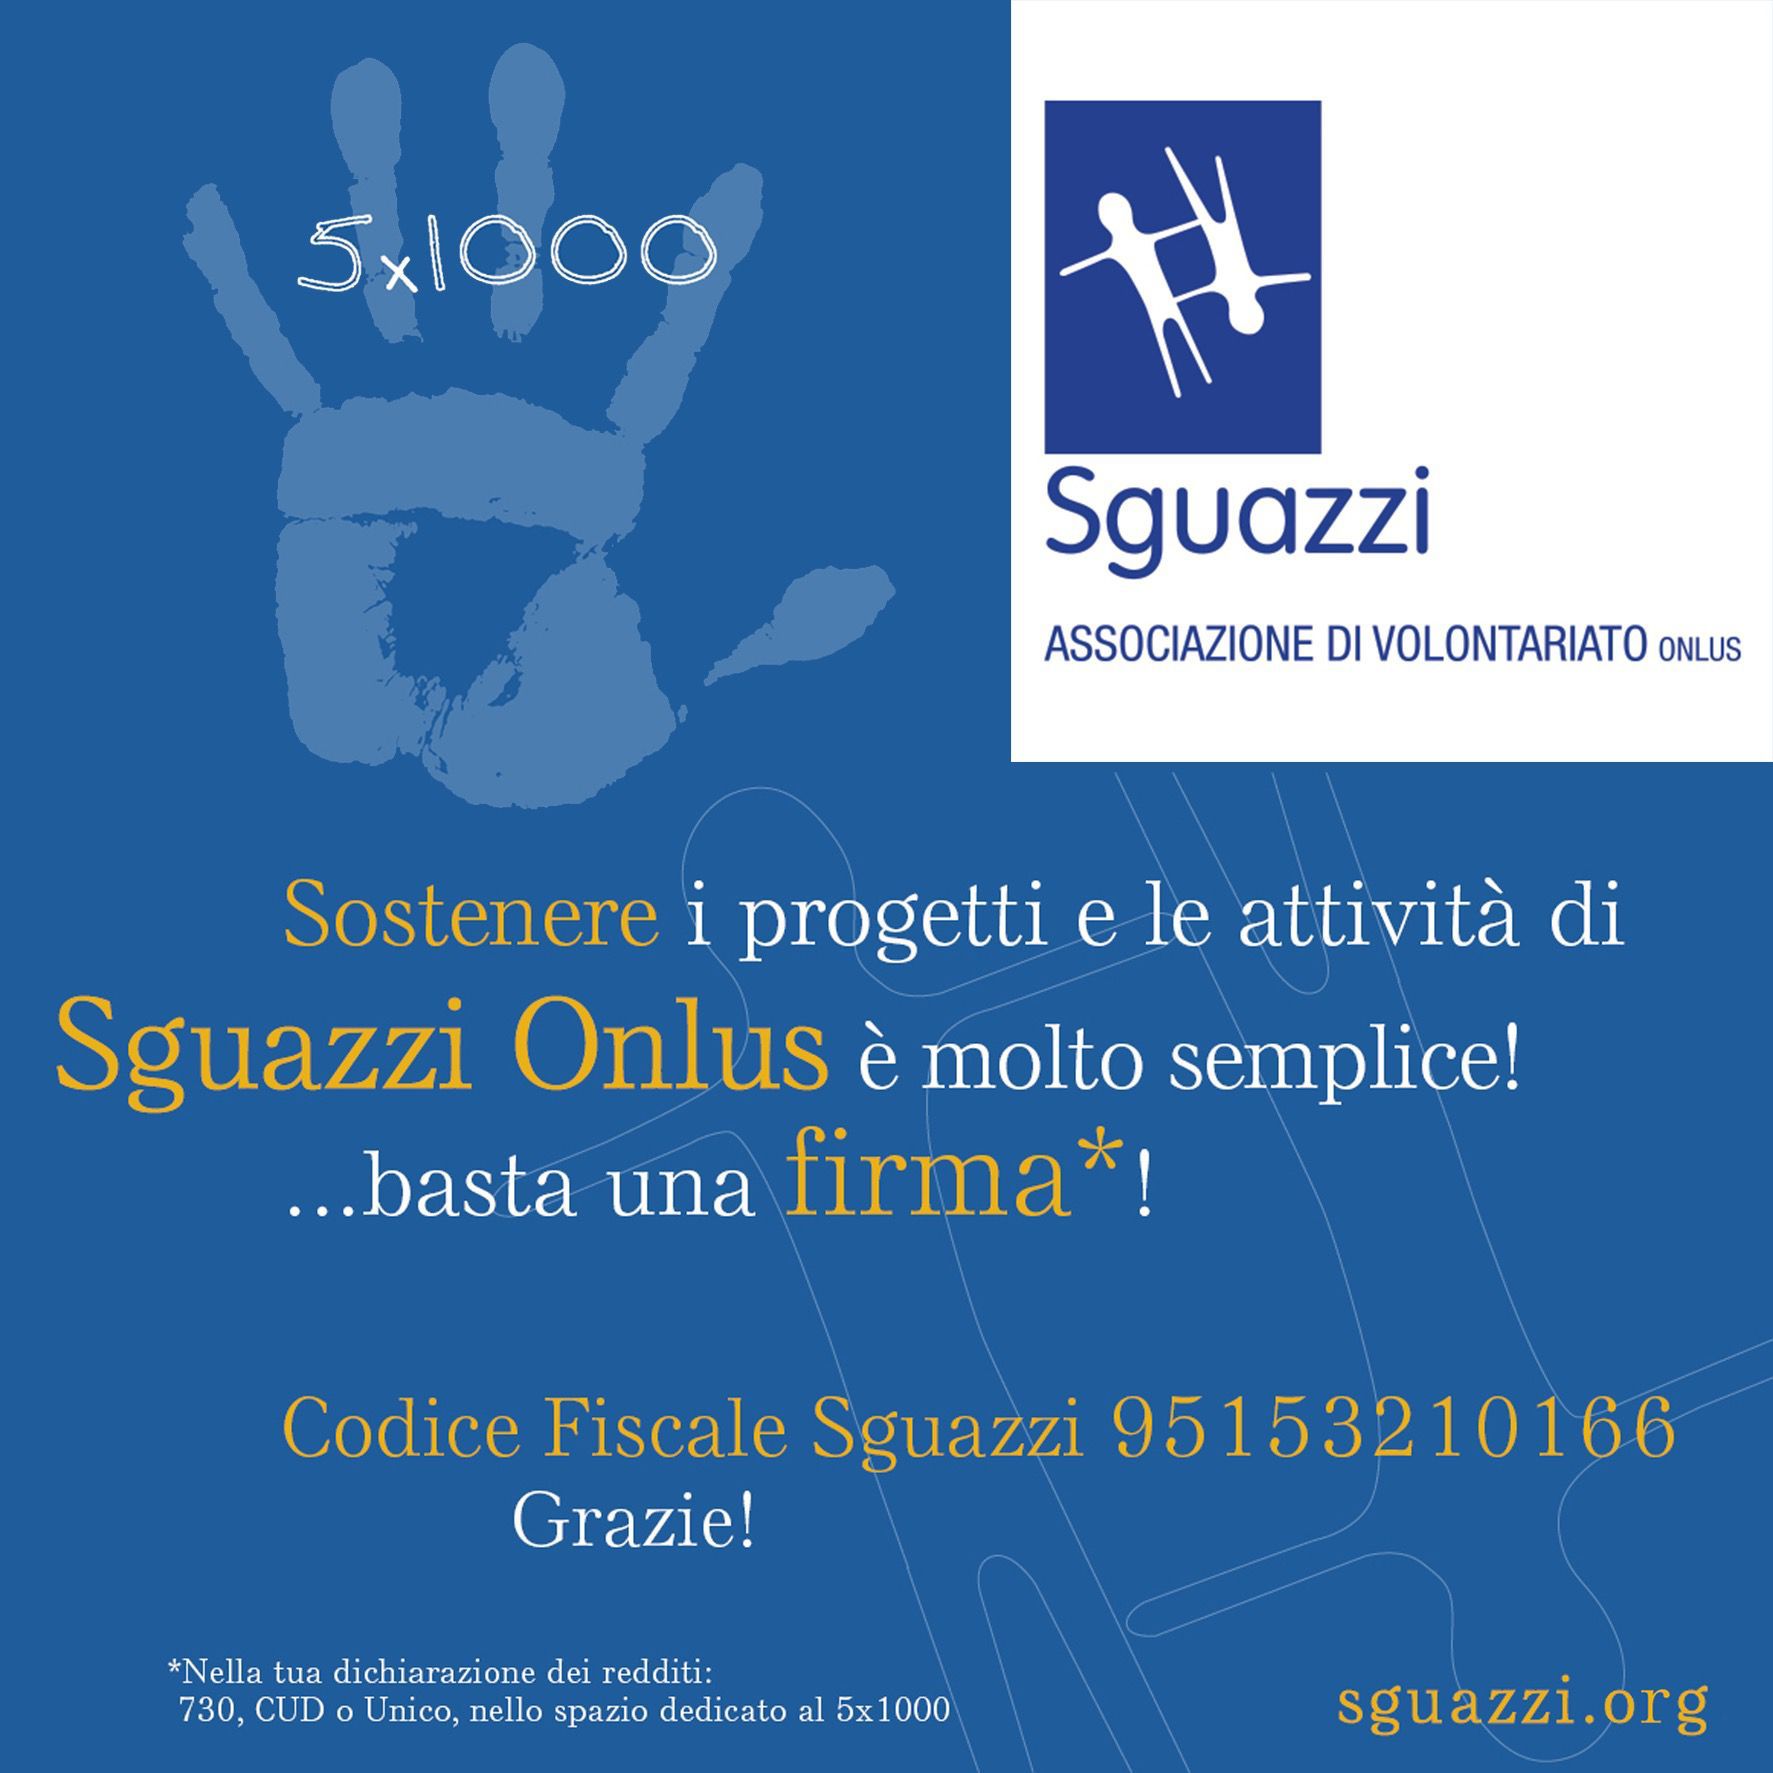 (c) Sguazzi.org